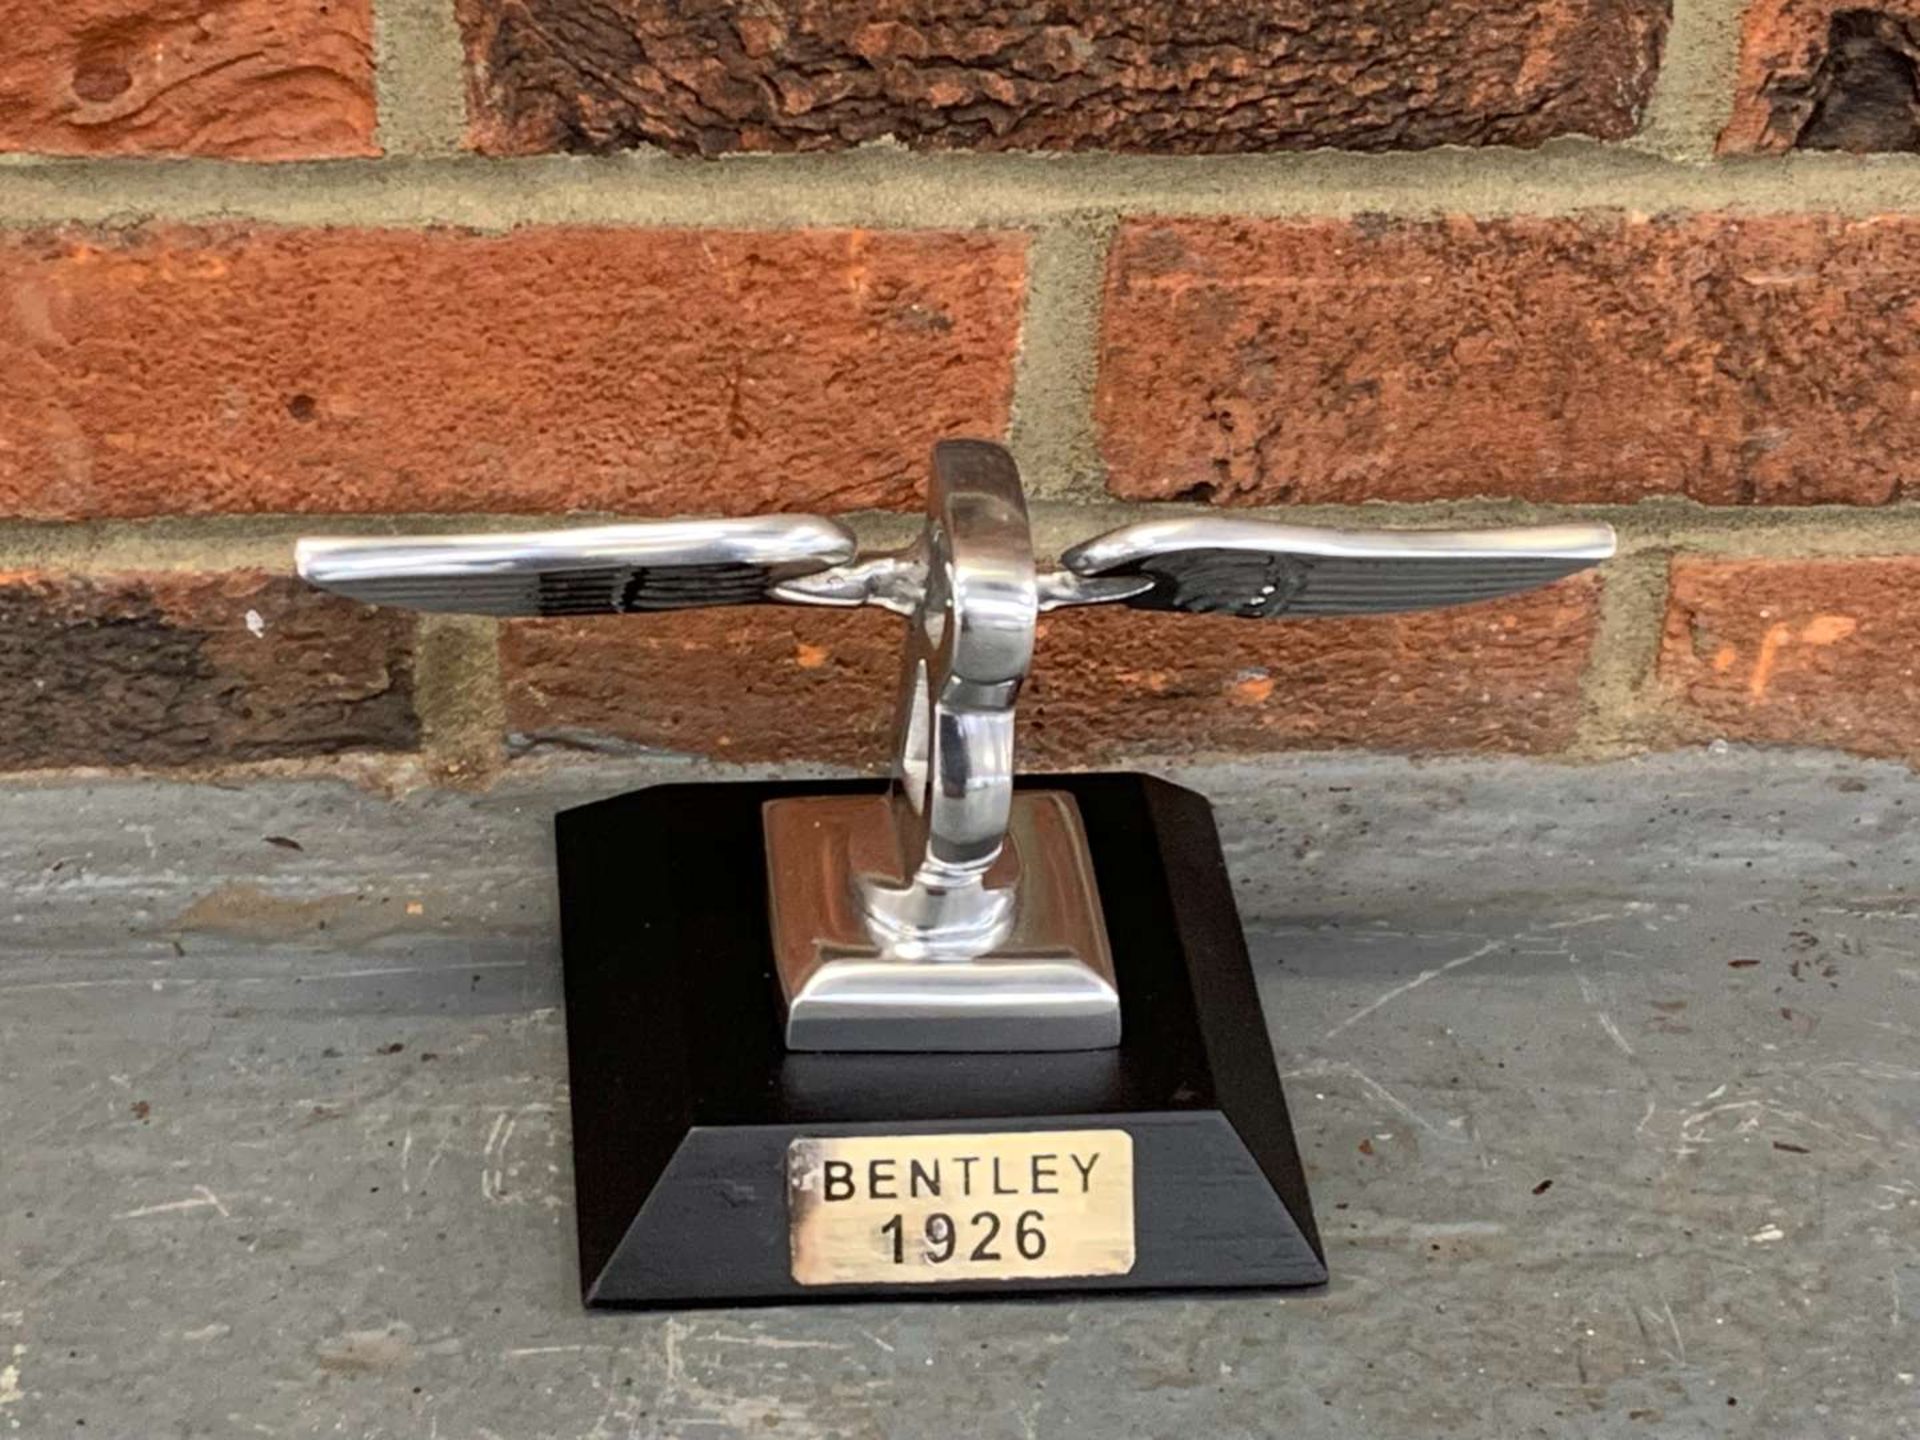 Cast Aluminium Bentley Flying B on Plinth - Image 2 of 4